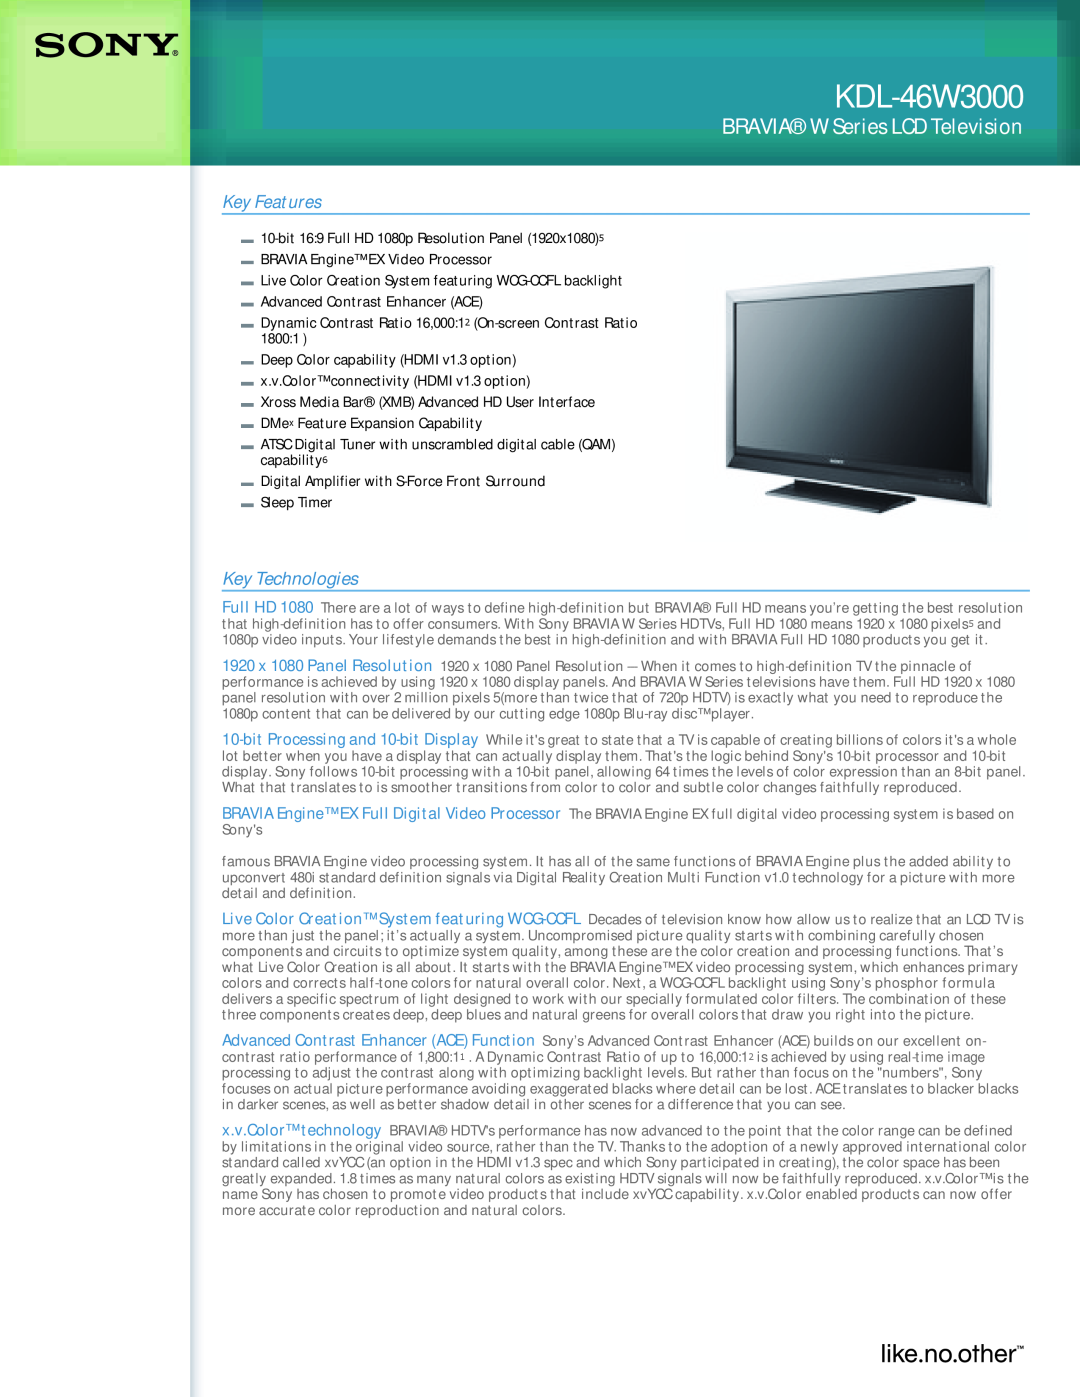 Sony KDL-W6W3000 manual KDL-46W3000, BRAVIAW Series LCD Television, Key Features, Key Technologies 